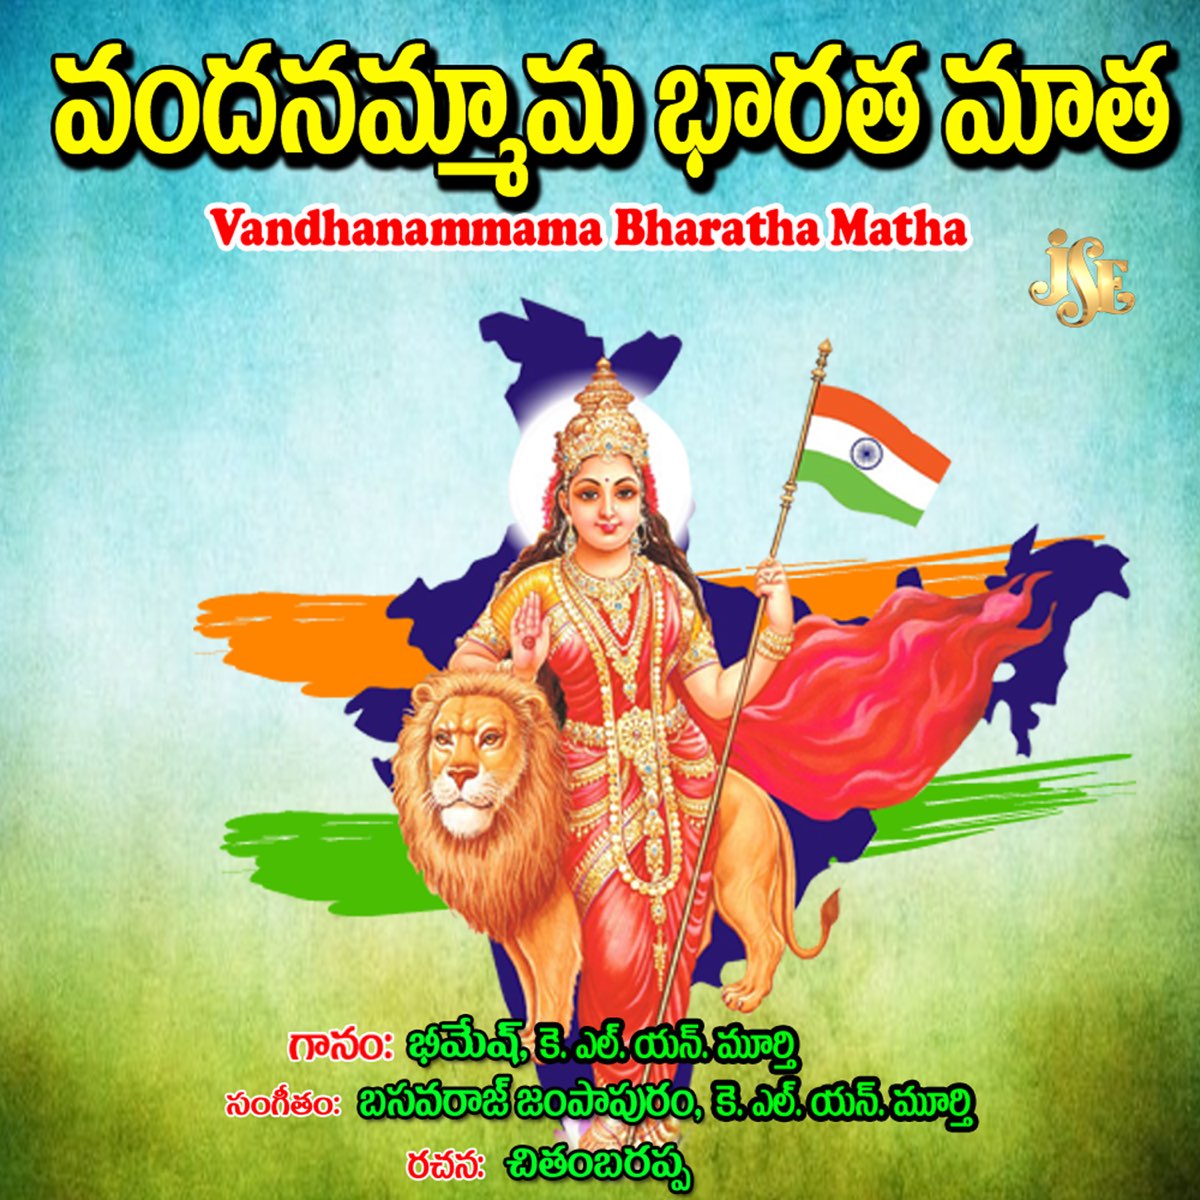 Vandhanammama Bharatha Matha - Single by K. L. N. Murthy ...